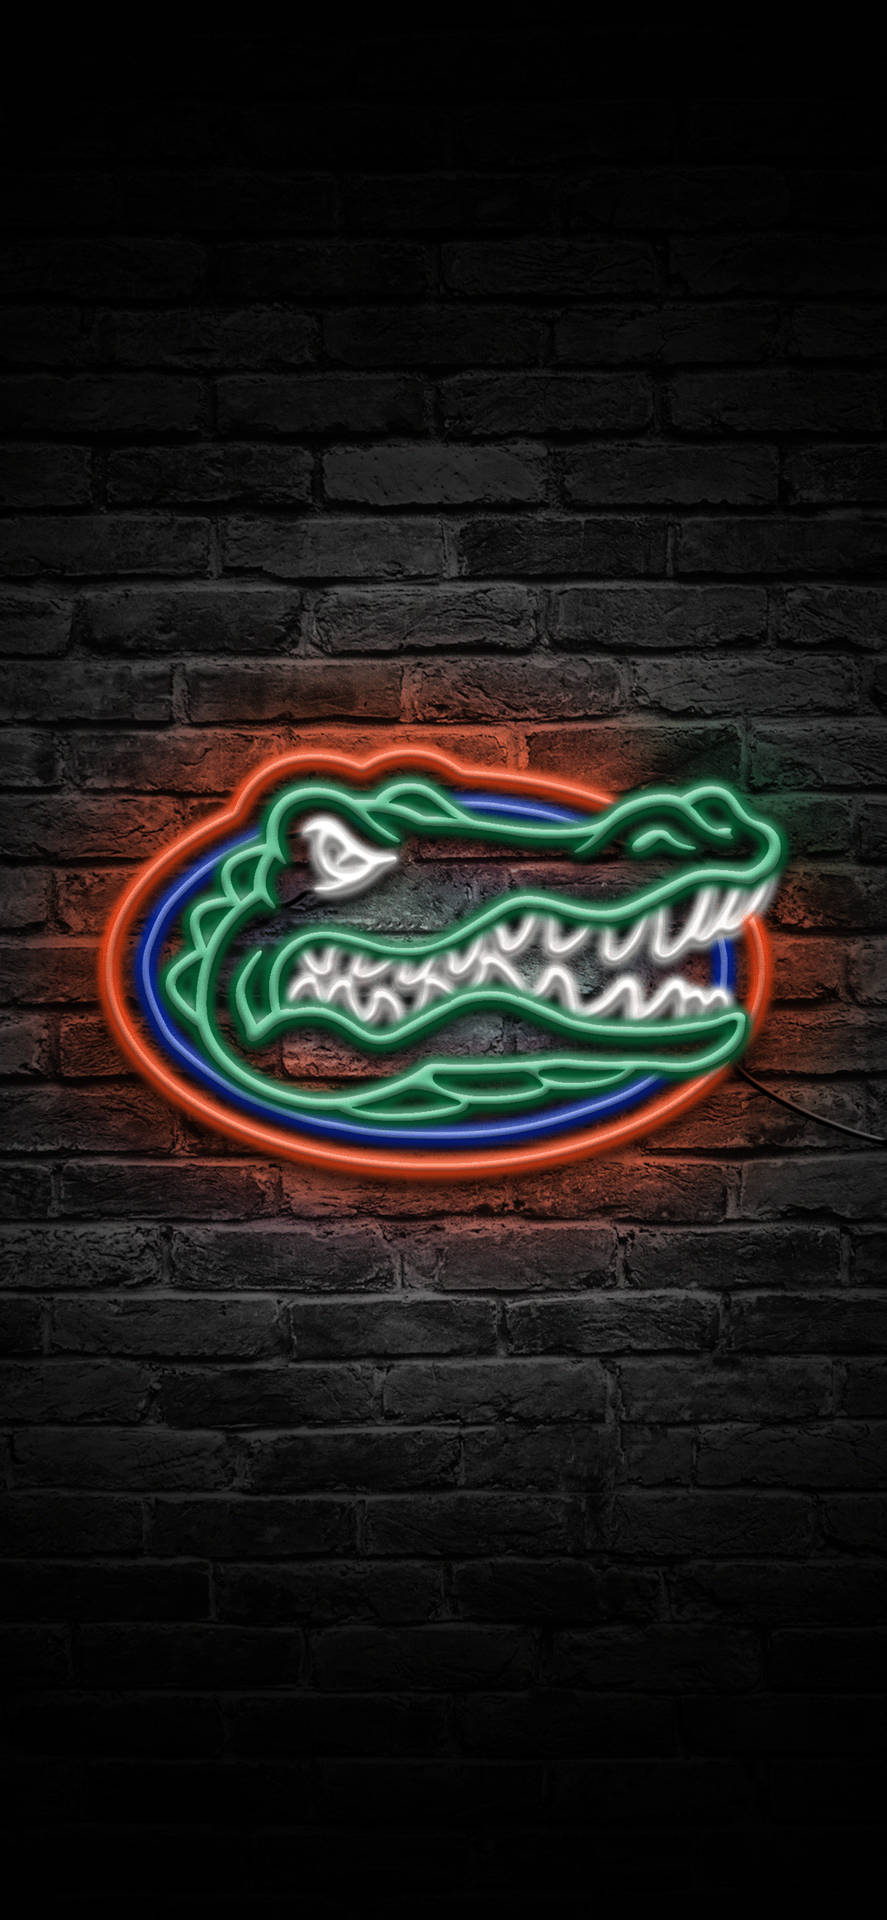 Floridagators-logotyp I Neonljus. Wallpaper